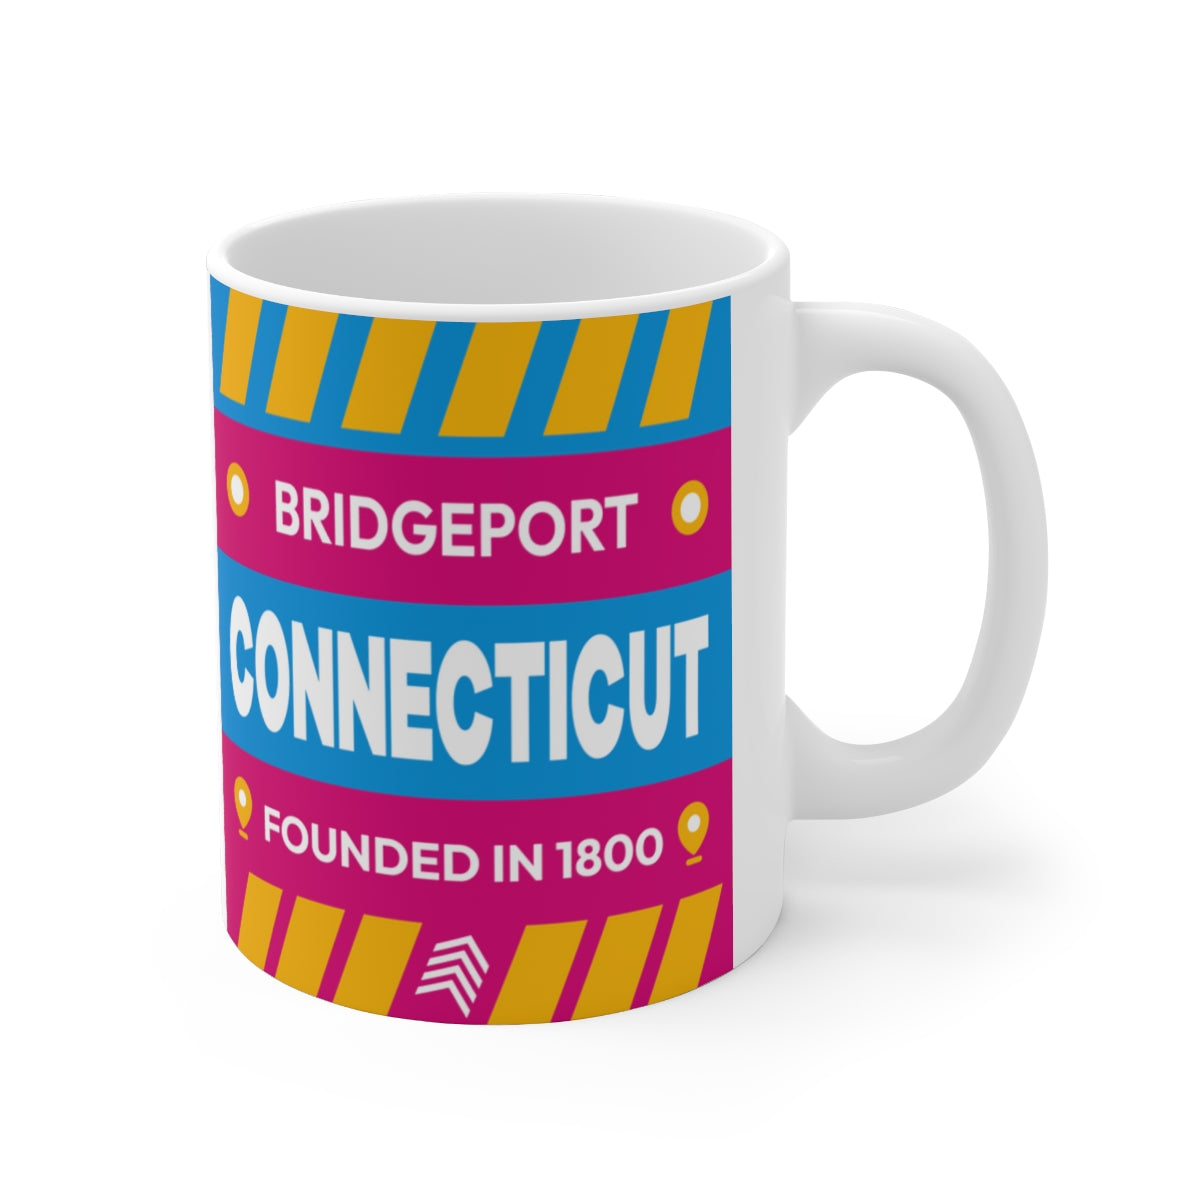 11oz Ceramic mug for Bridgeport, Connecticut. Side view